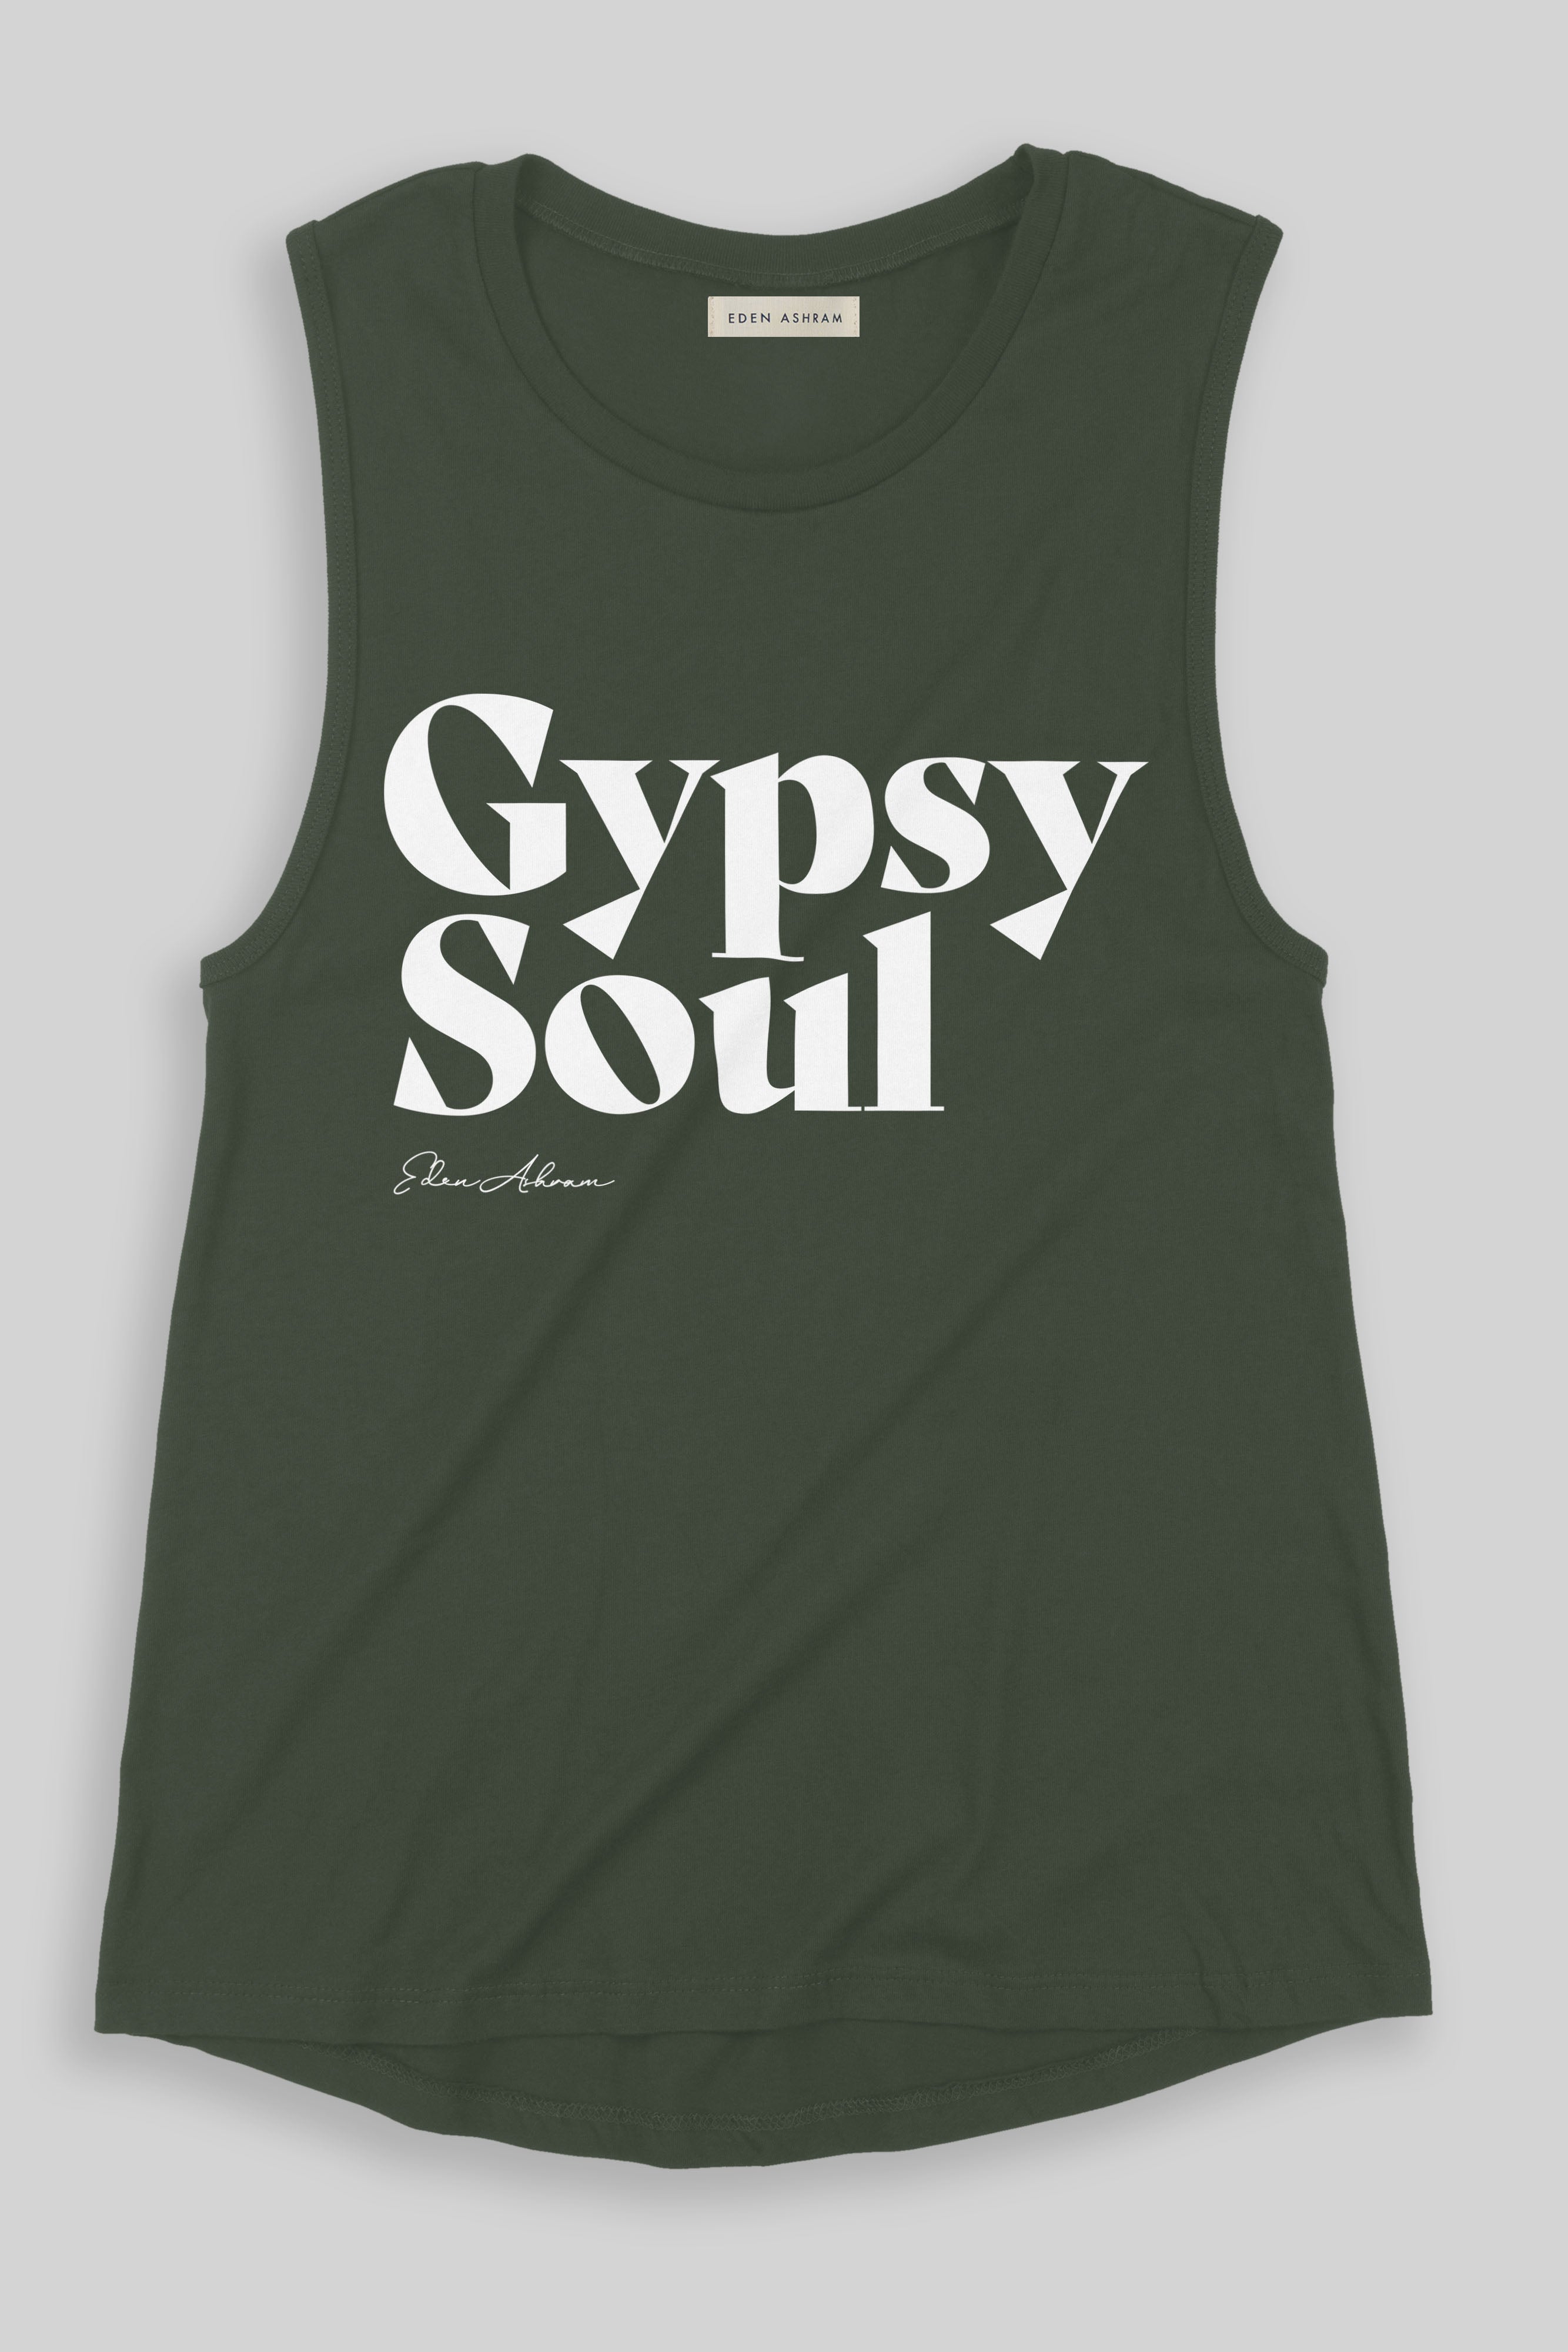 EDEN ASHRAM Gypsy Soul Jersey Muscle Tank Army Green